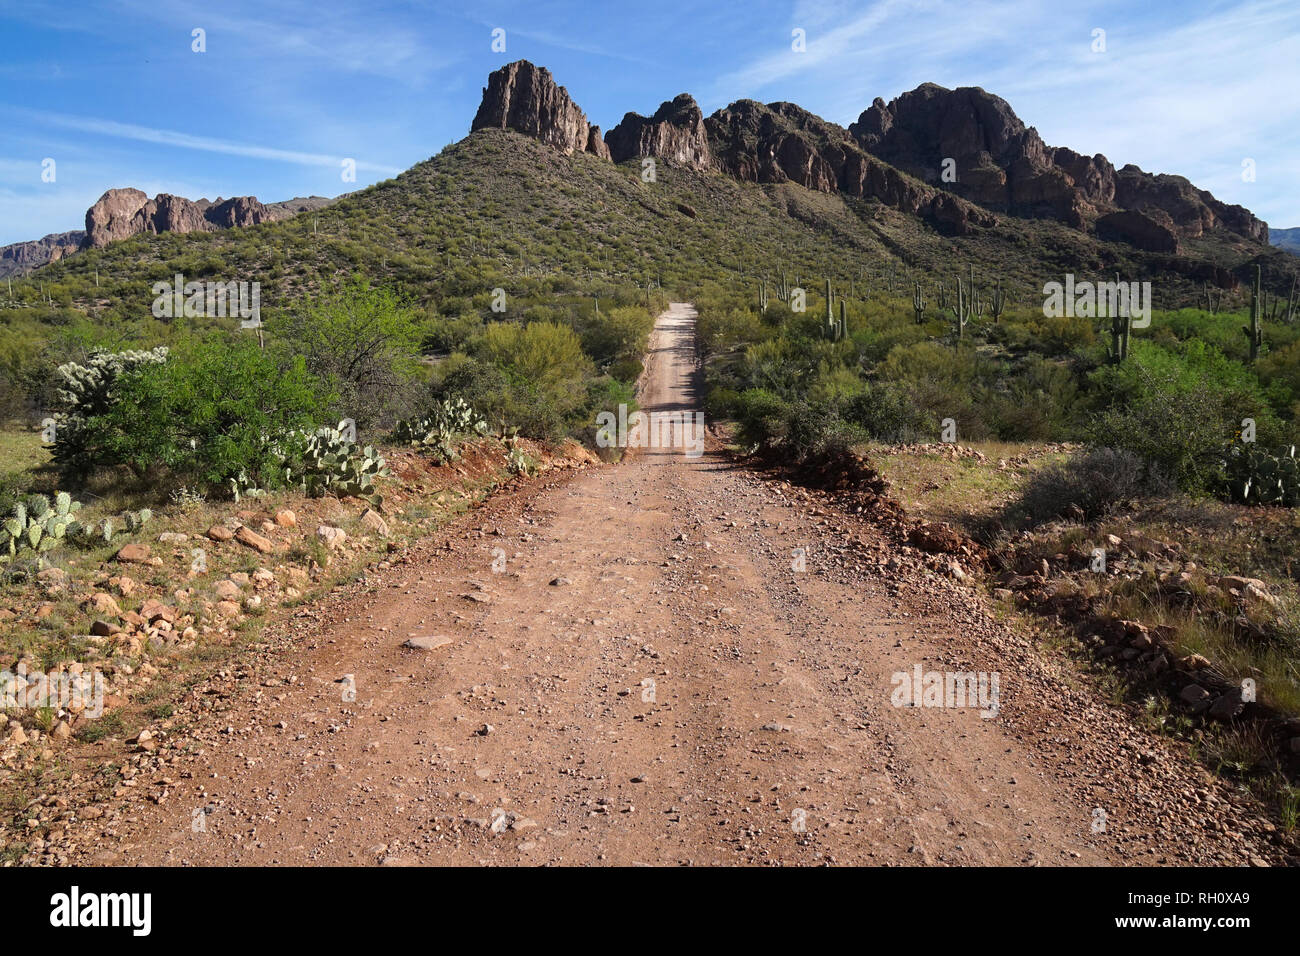 A dirt road runs through the Arizona desert. Stock Photo